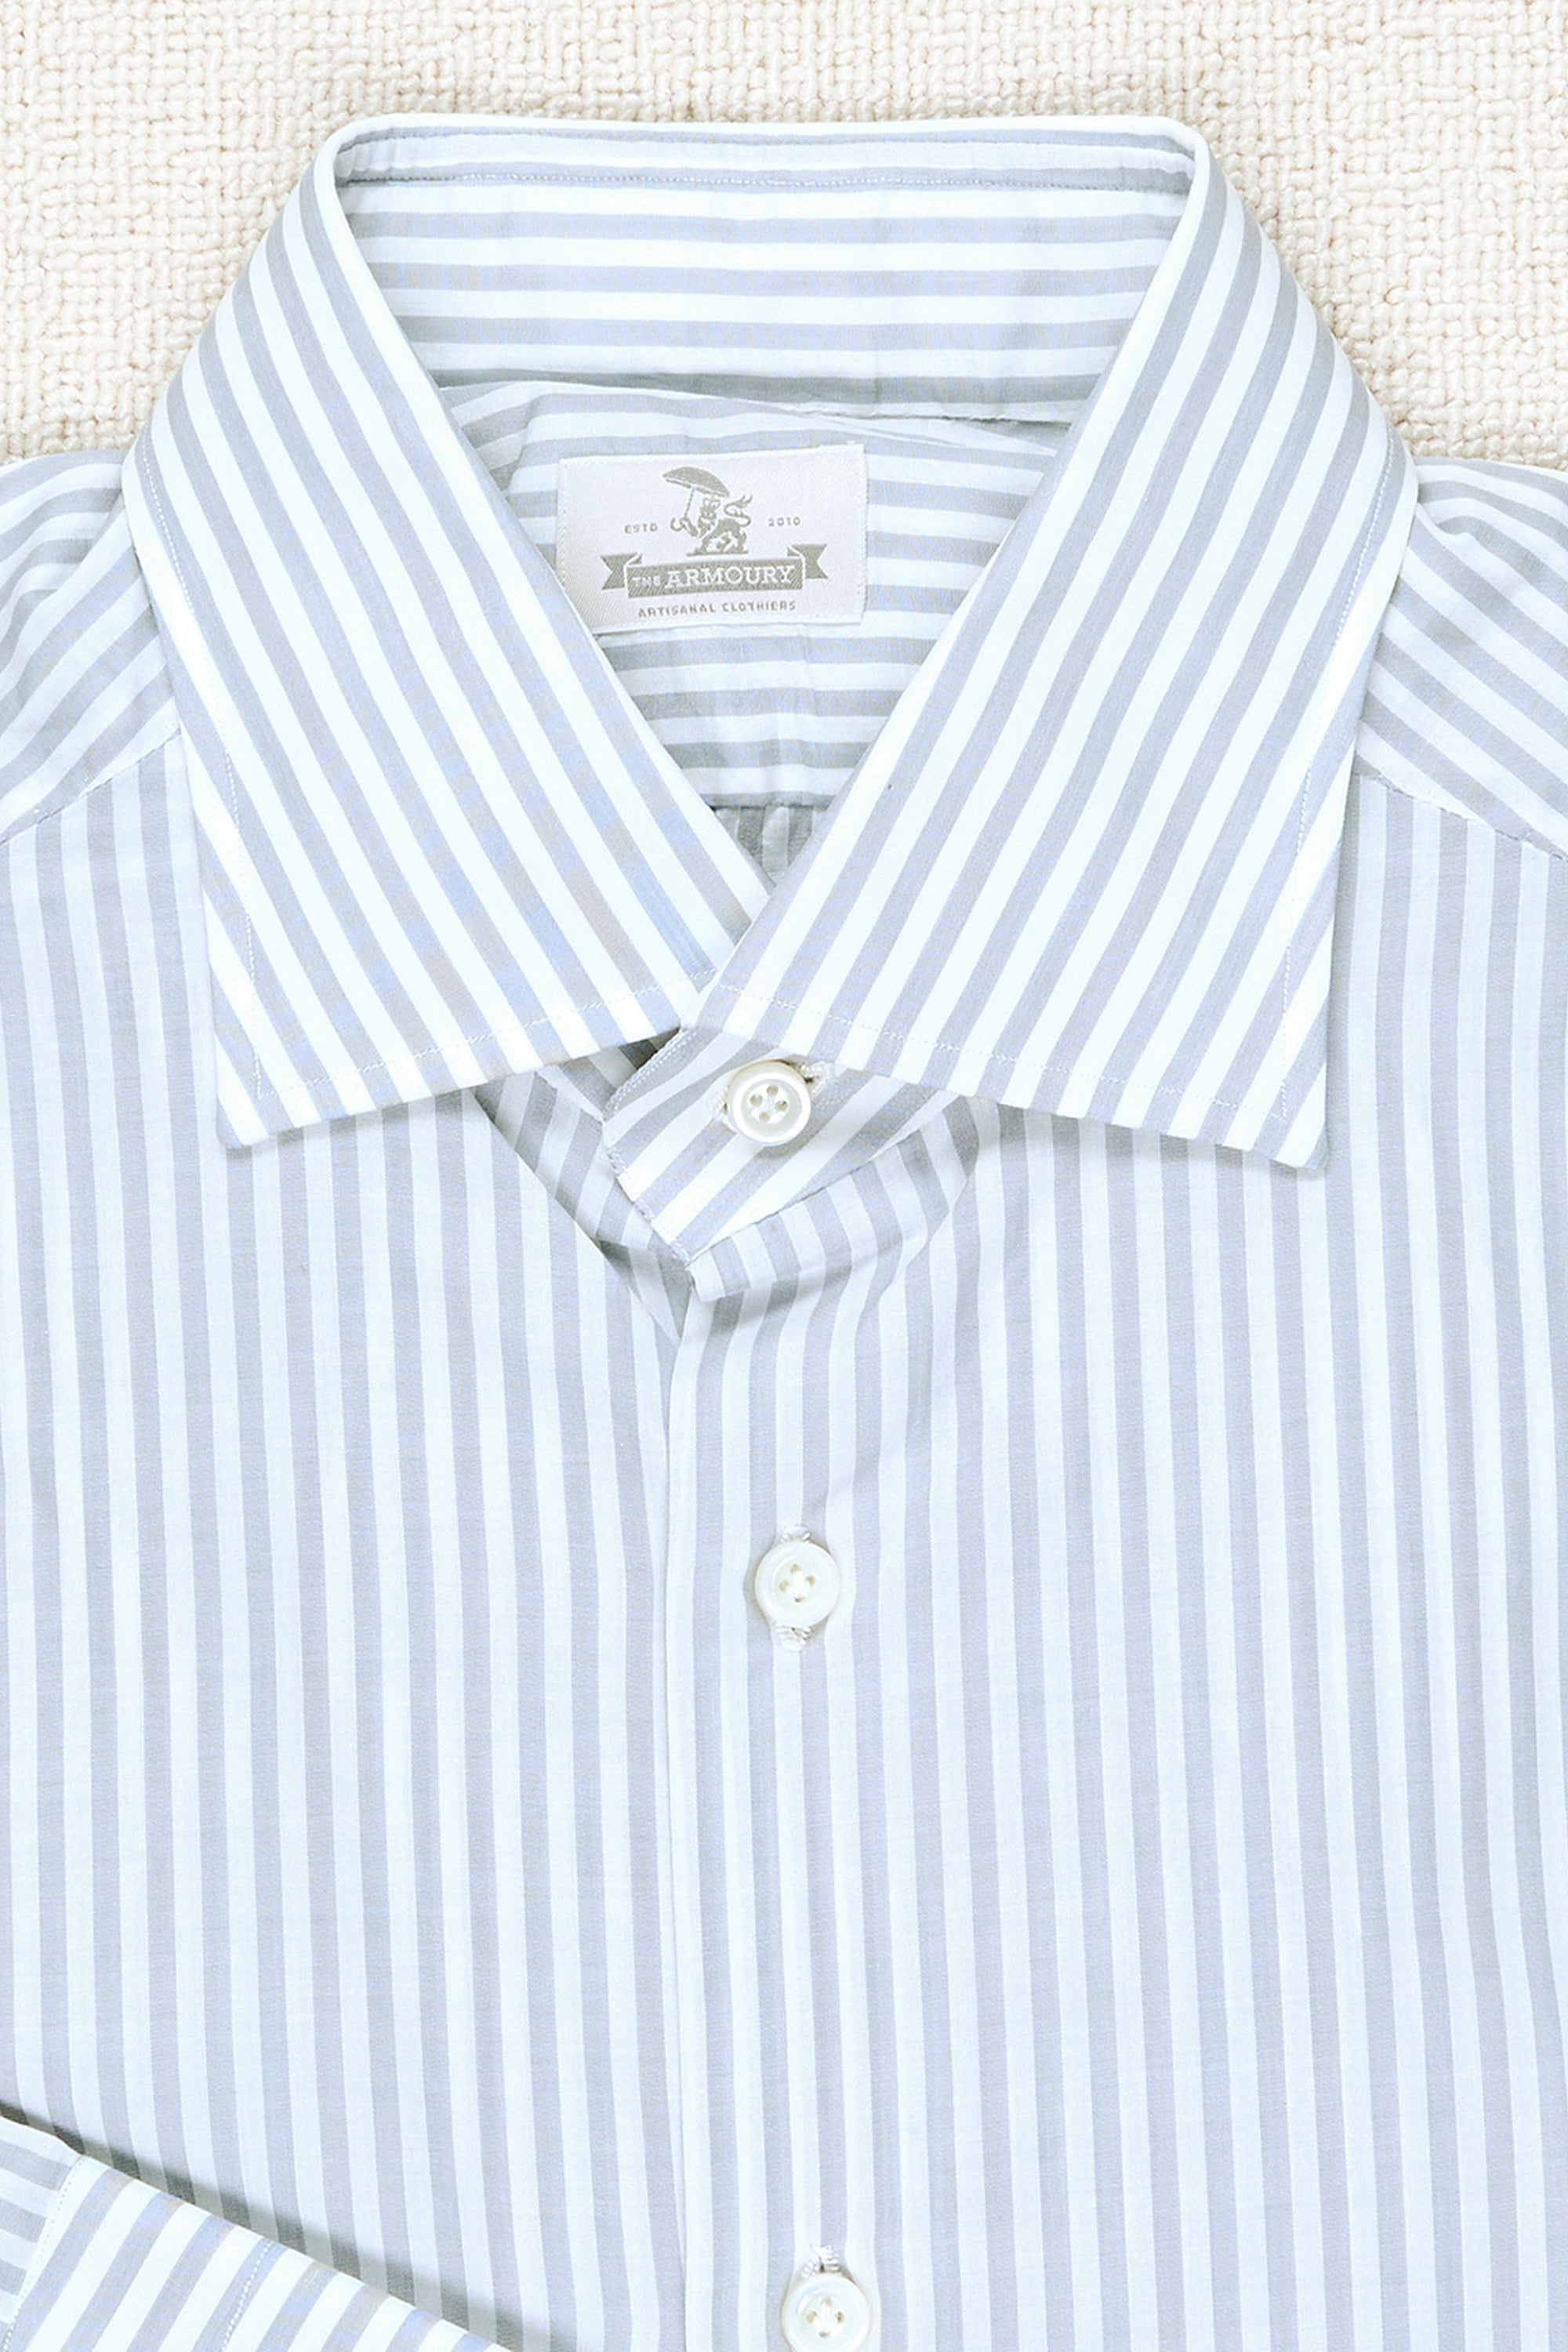 The Armoury Exclusive Carlo Riva White/Grey Butcher Stripe Cotton Spread Collar Shirt *sample*